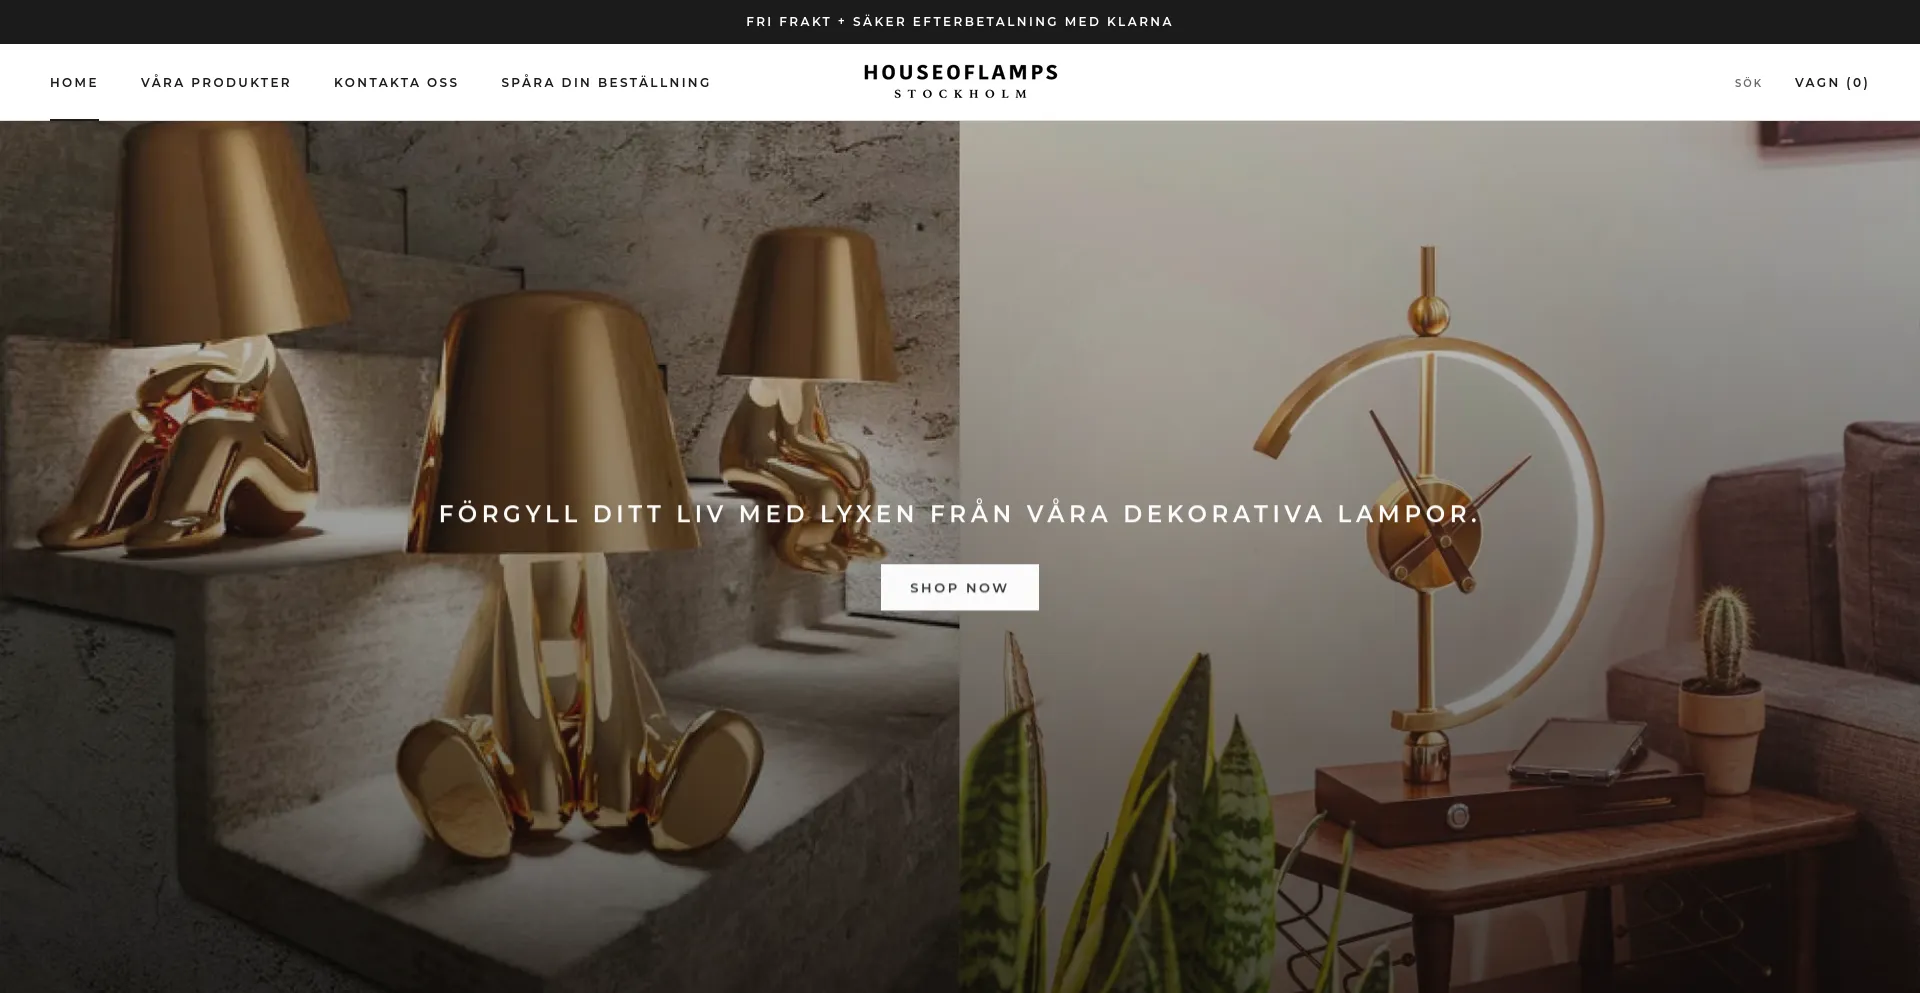 Houseoflamps-stockholm.com